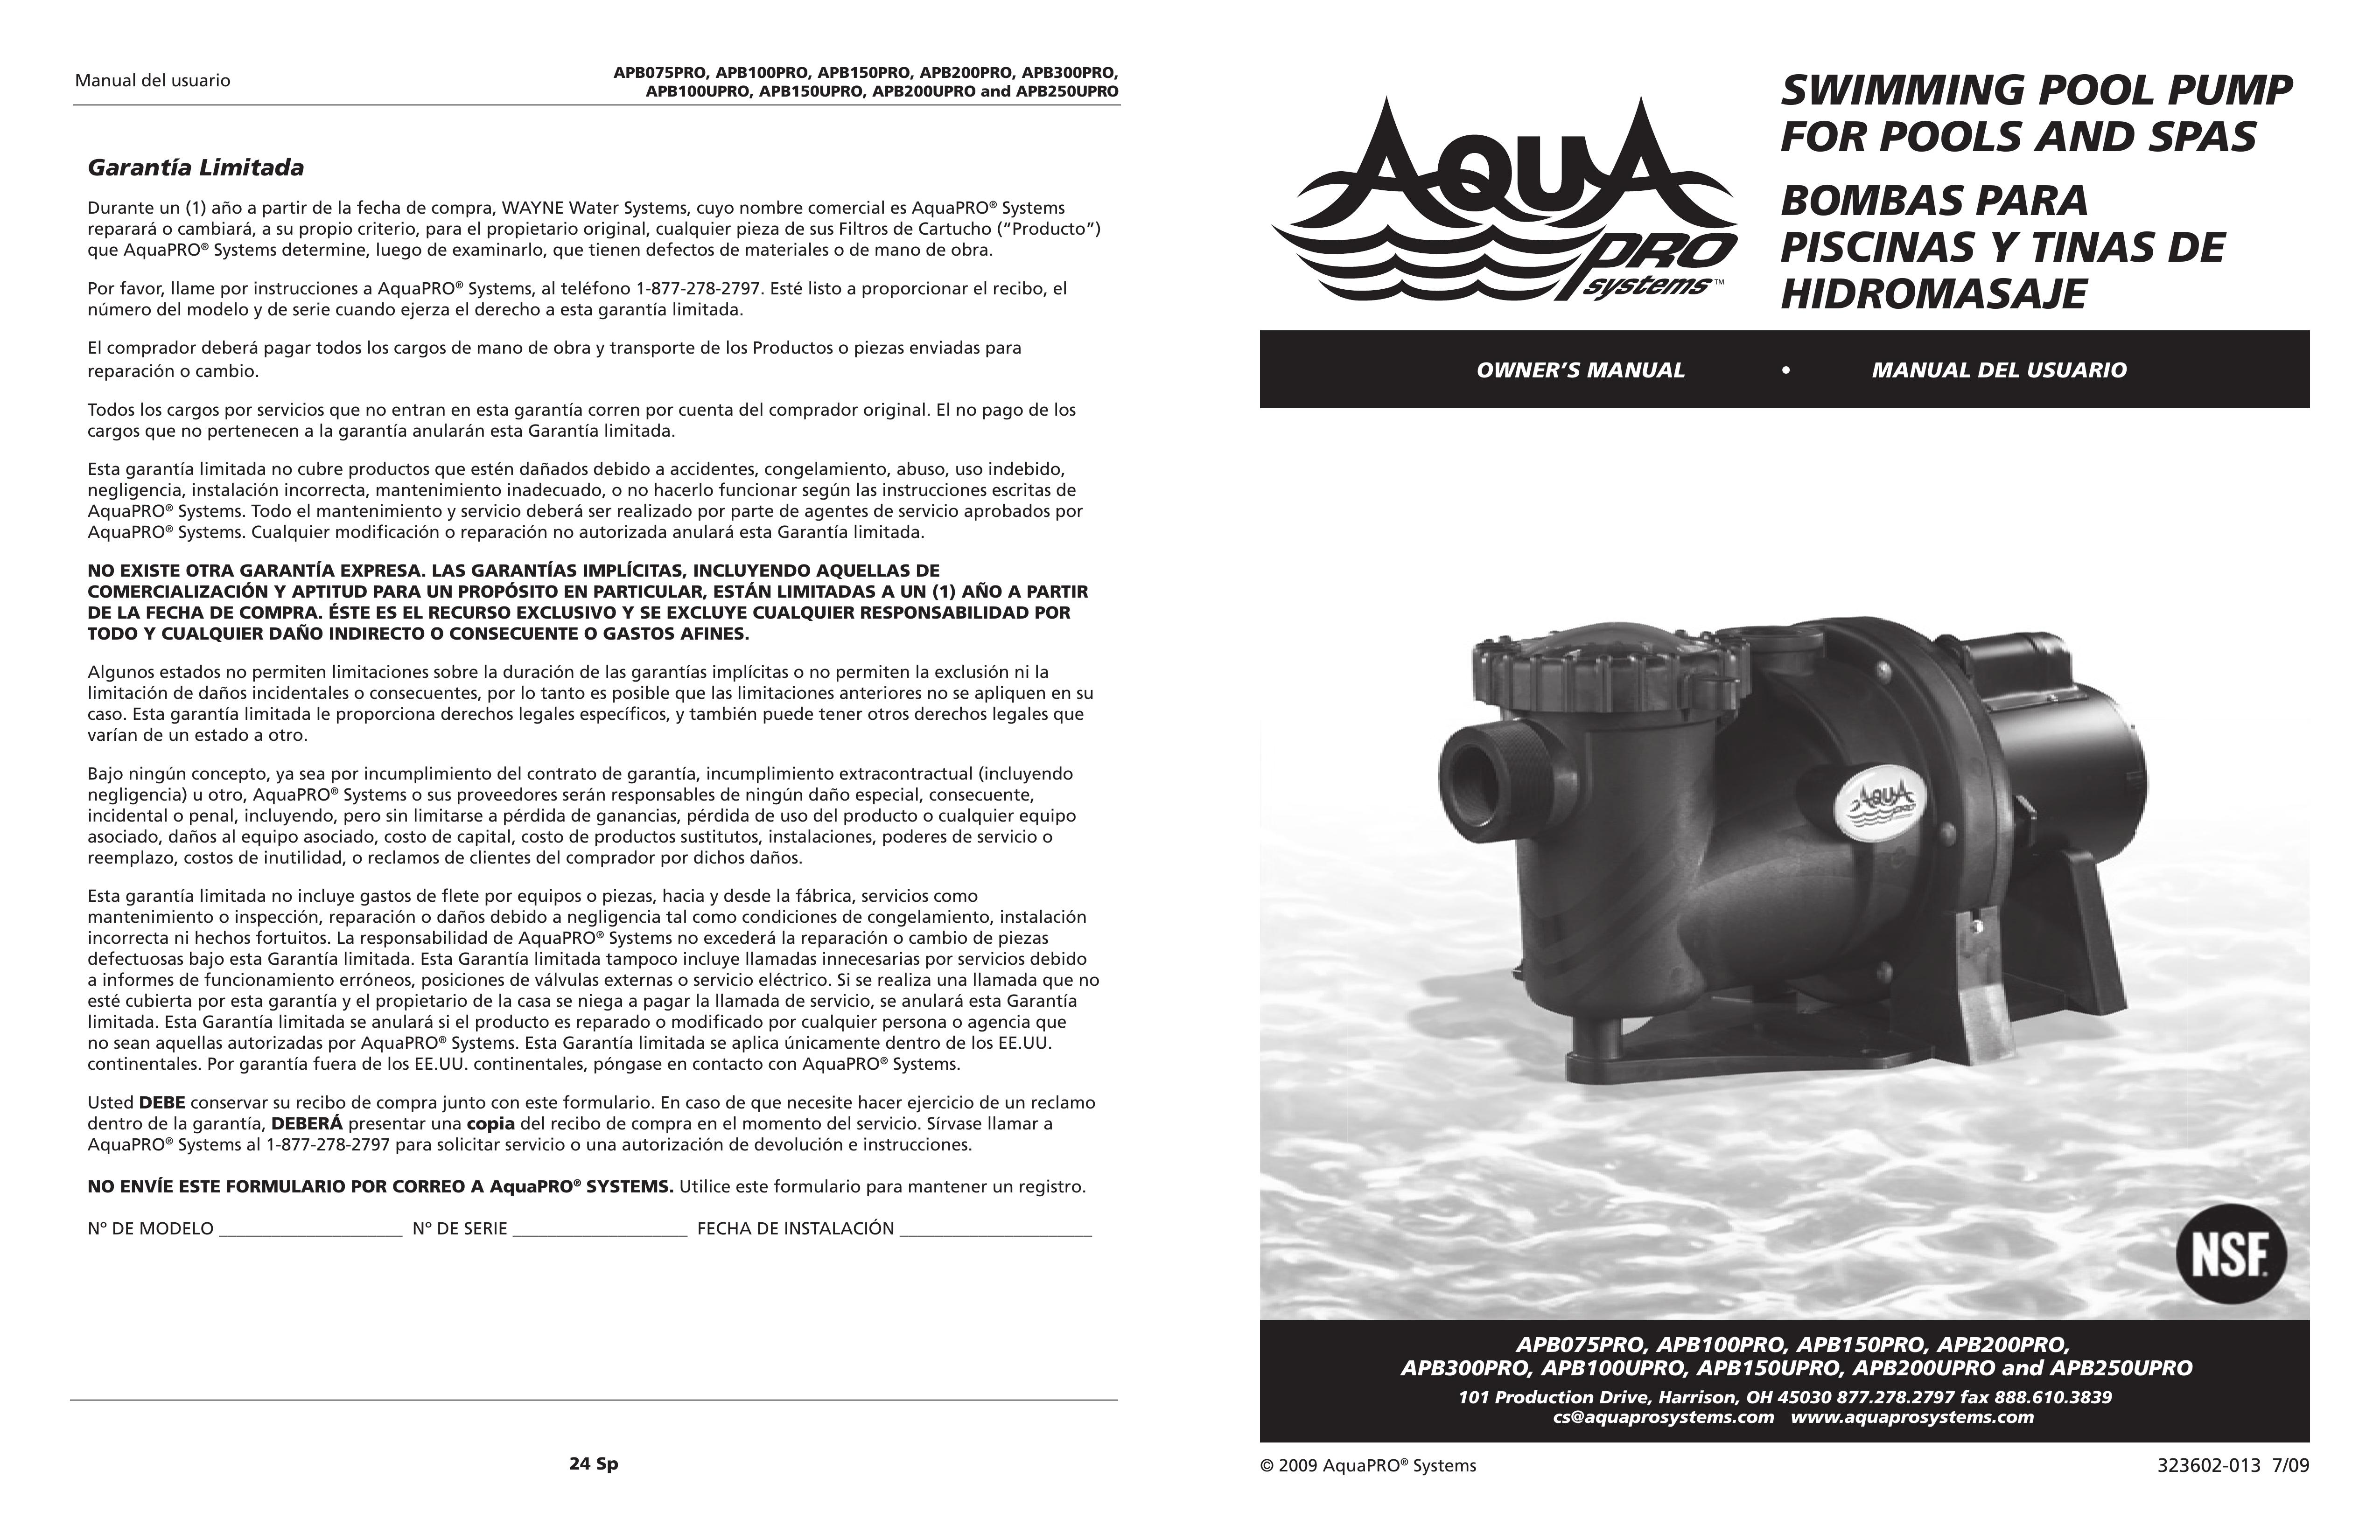 AquaPRO APB150UPRO Swimming Pool Pump User Manual